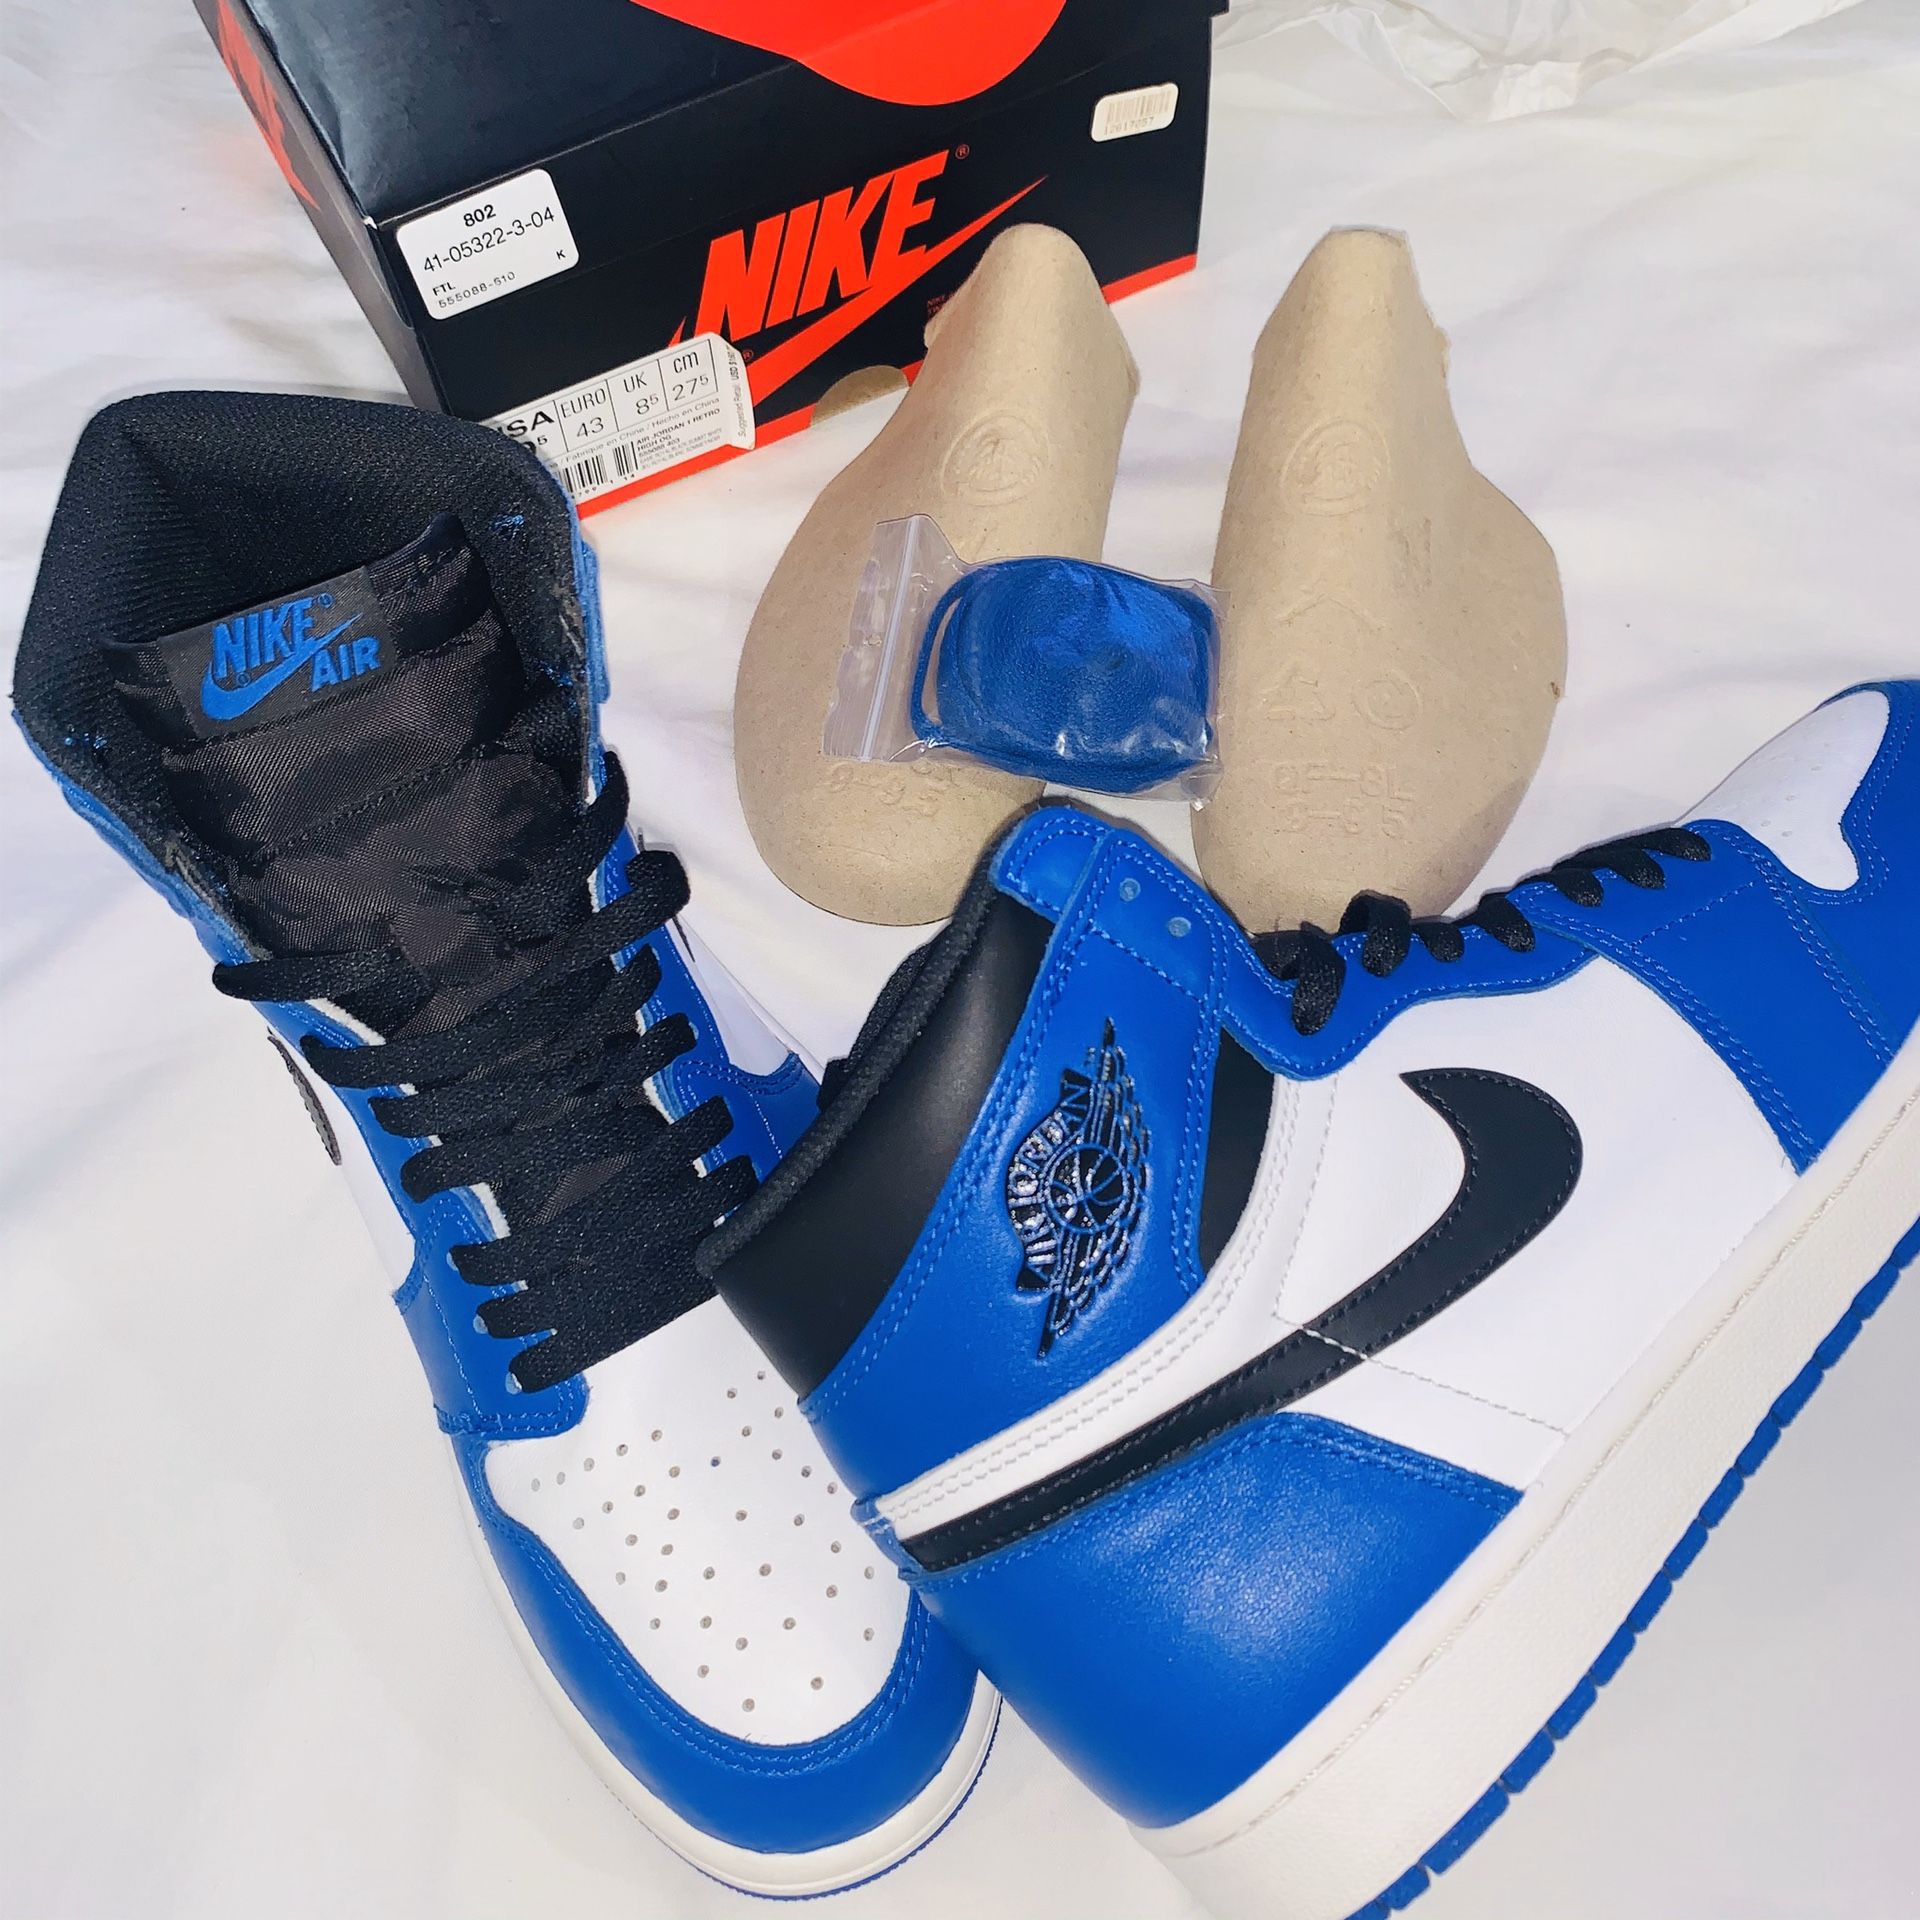 Nike Air Jordan 1 High OG Game Royal Mens Size 9.5 2018 555088-403 100% authentic